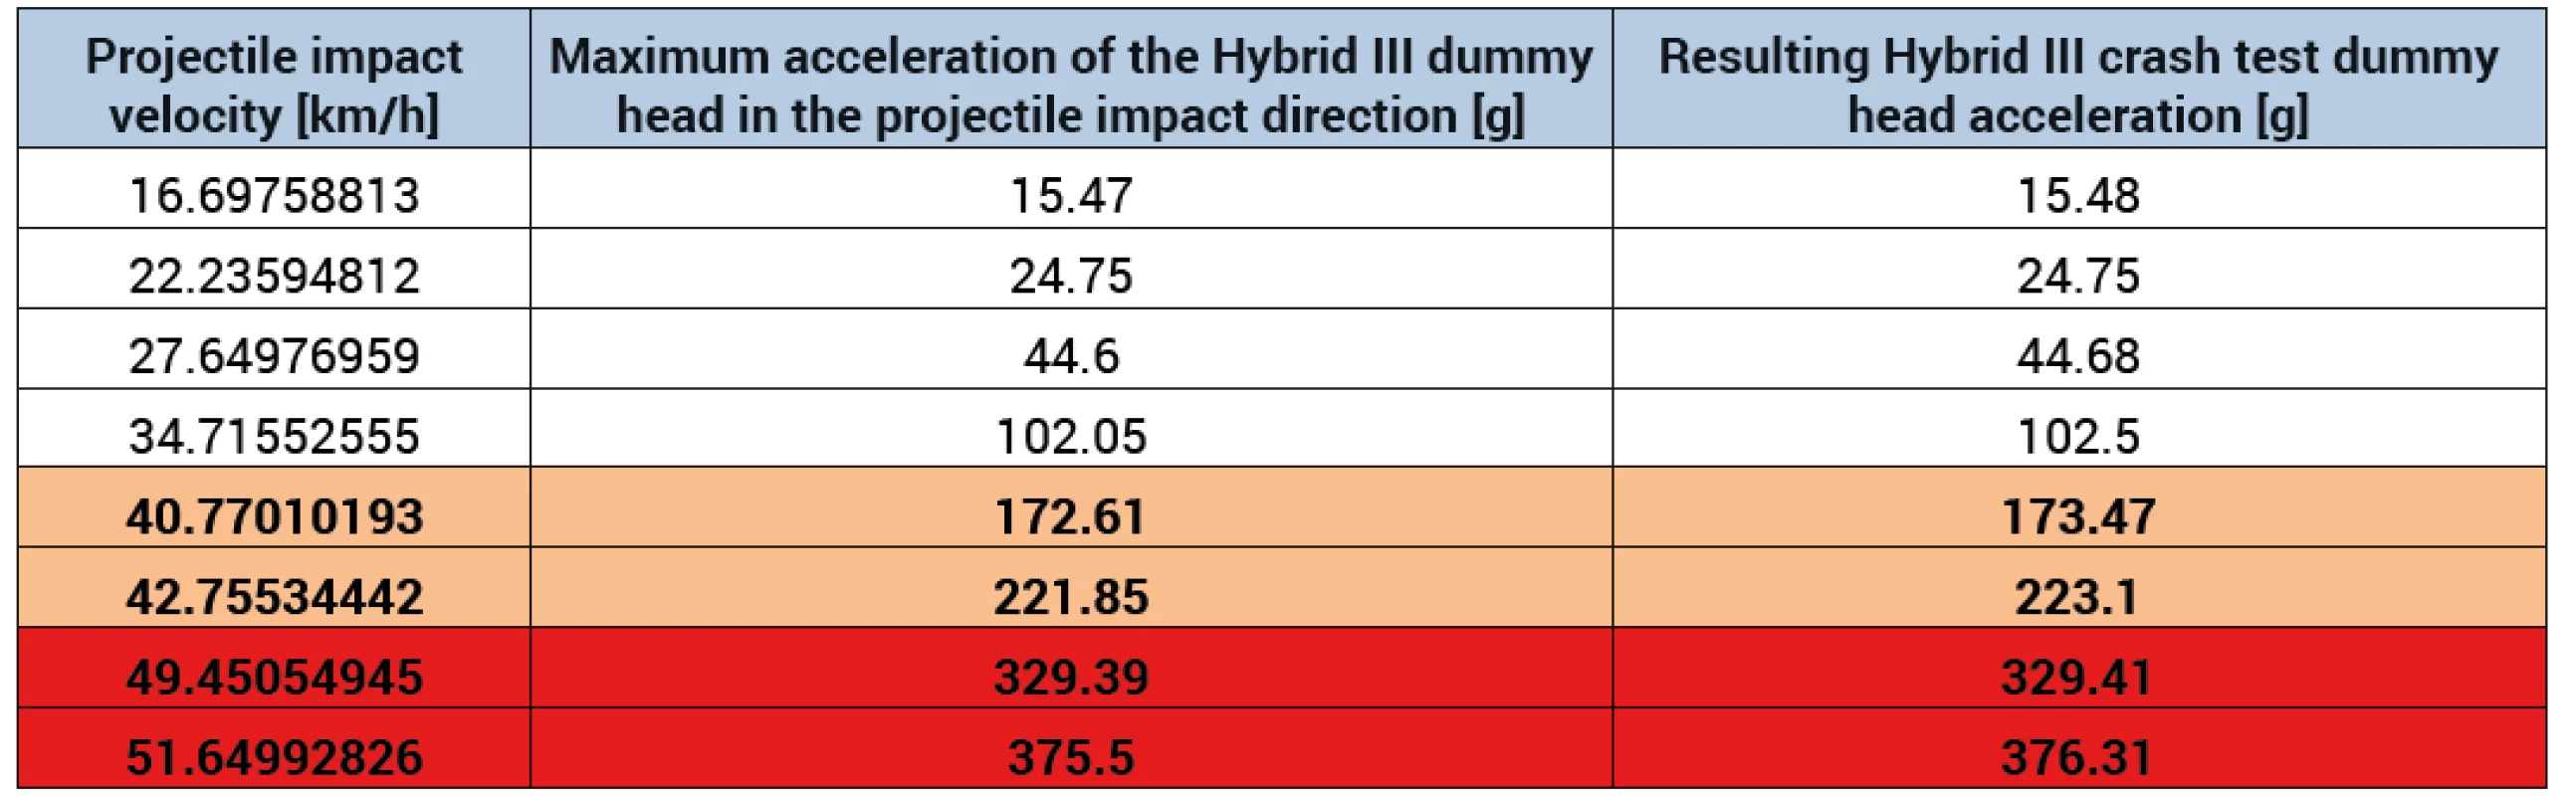 Maximum acceleration values of the Hybrid III dummy head